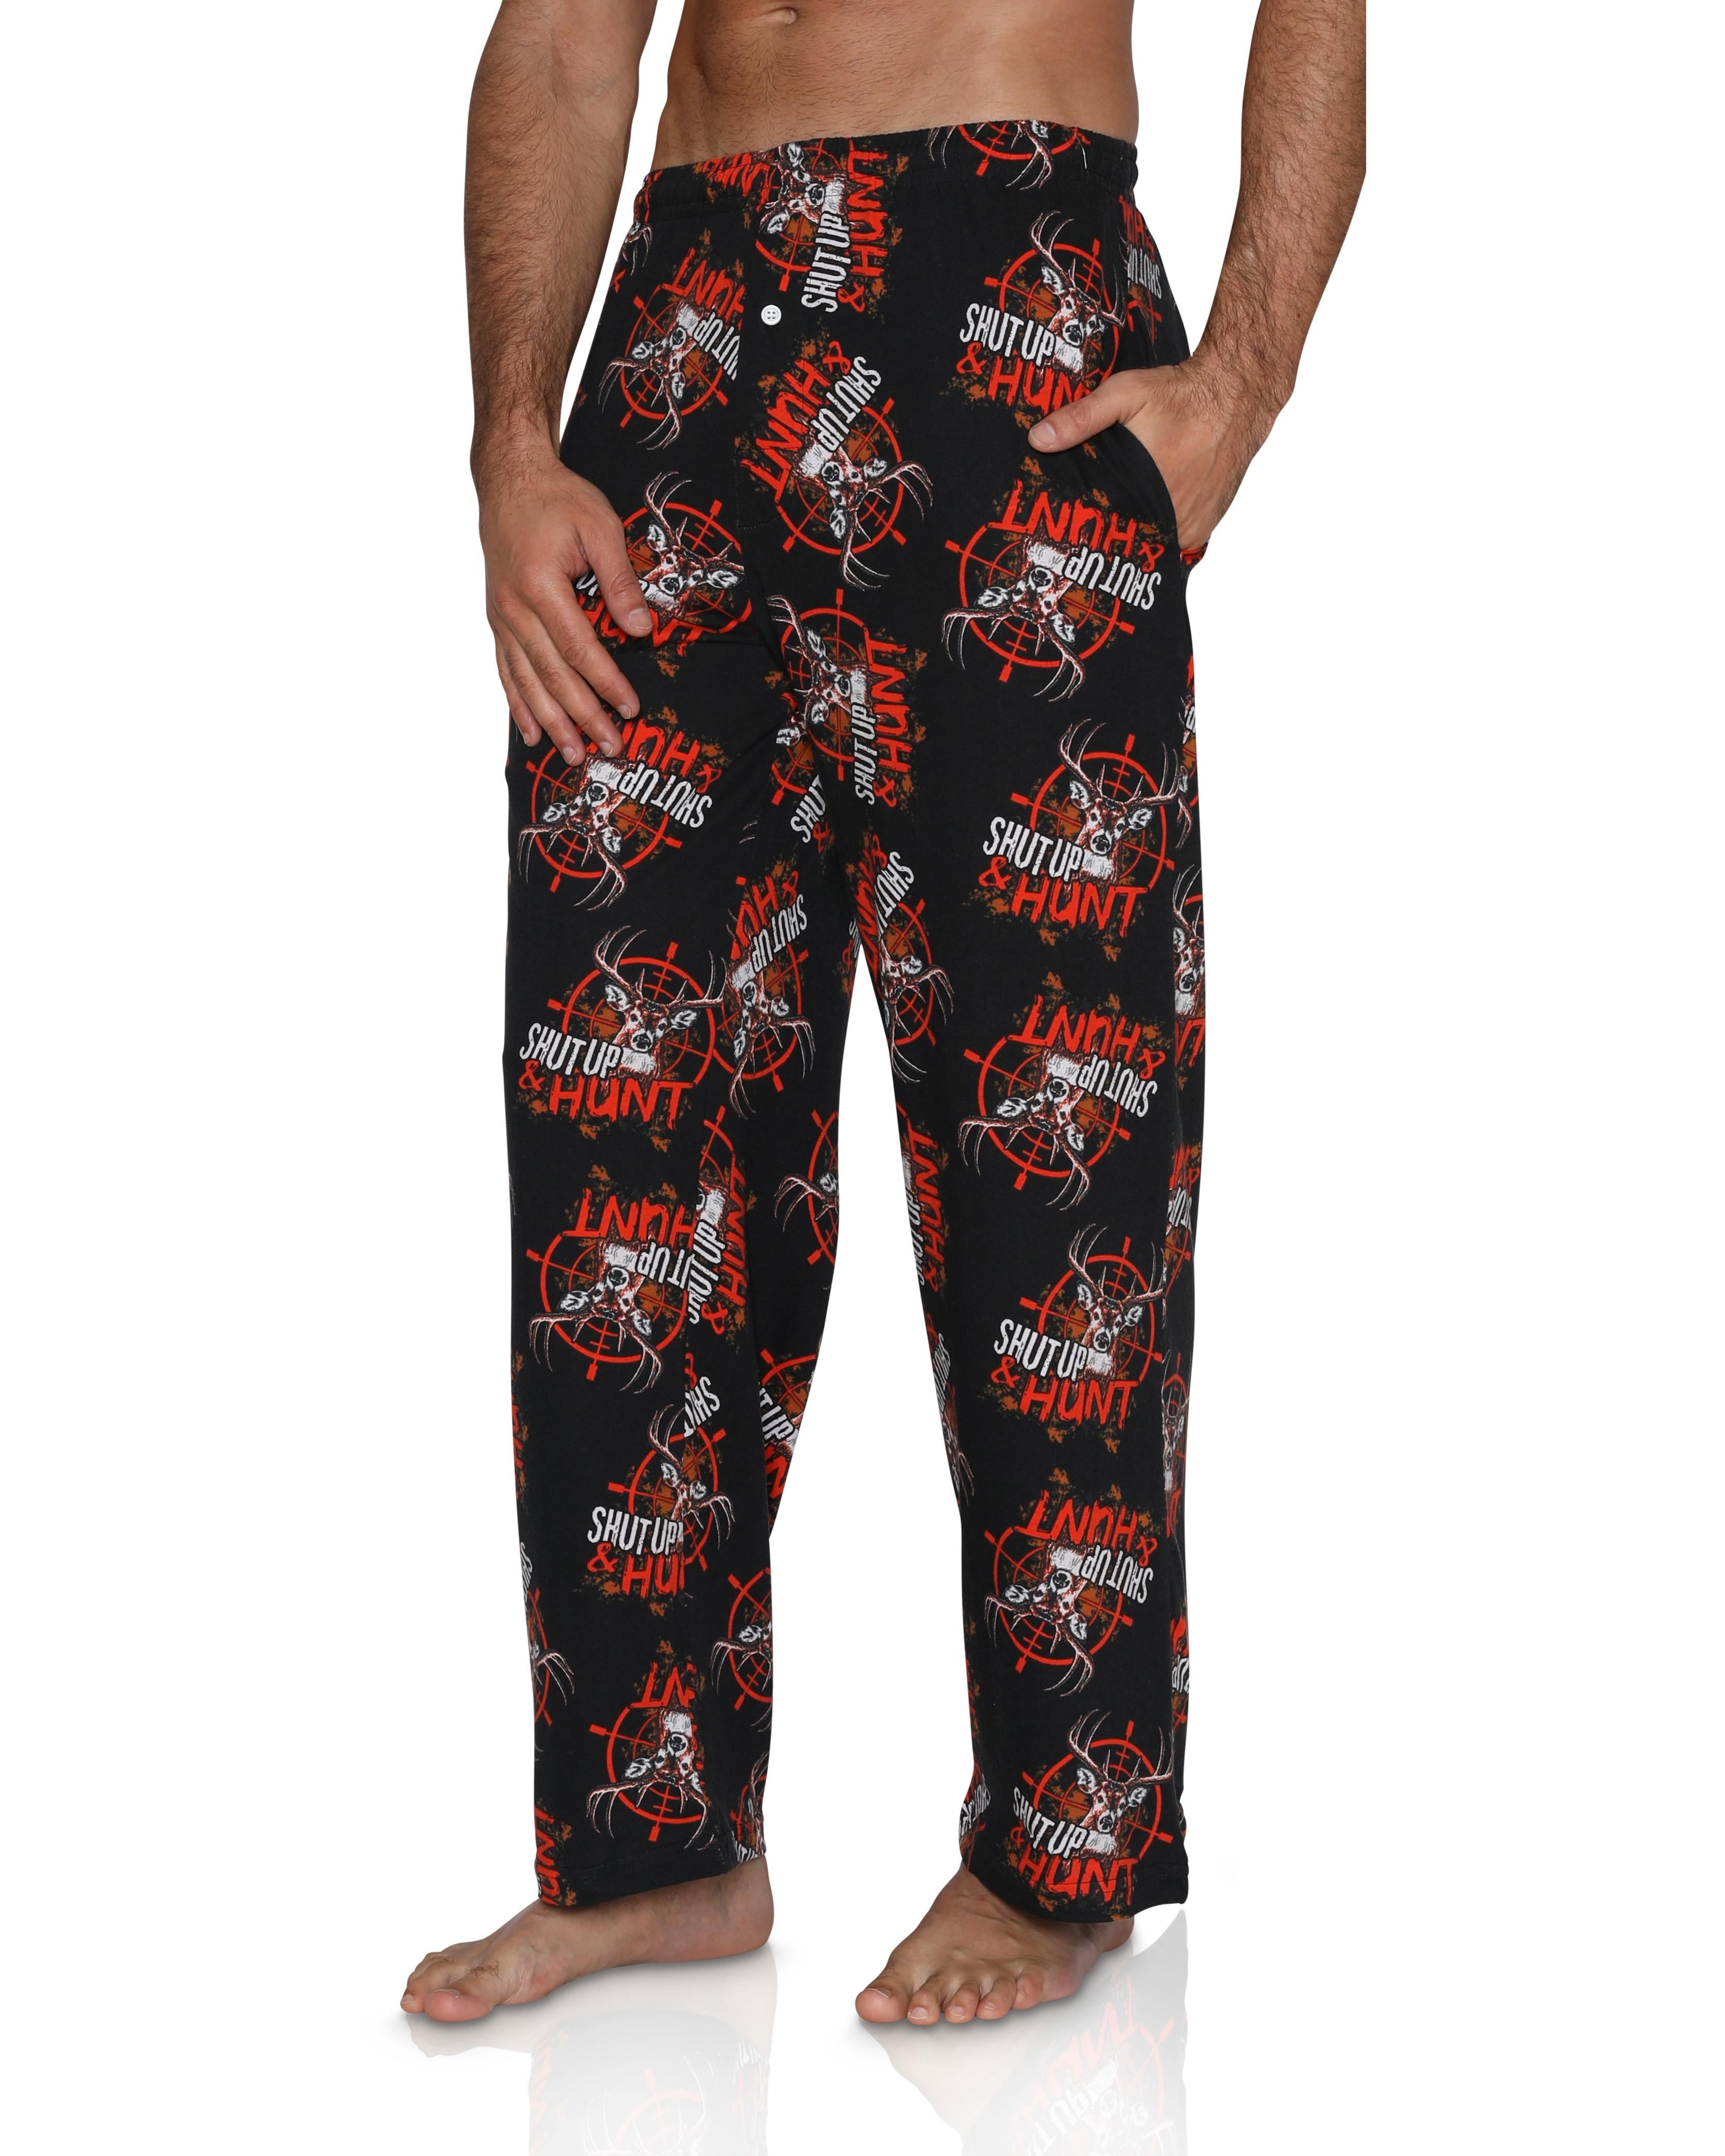 Fun Boxers - Men's Fun Lounge Pants Boxers Printed Pajama and ...